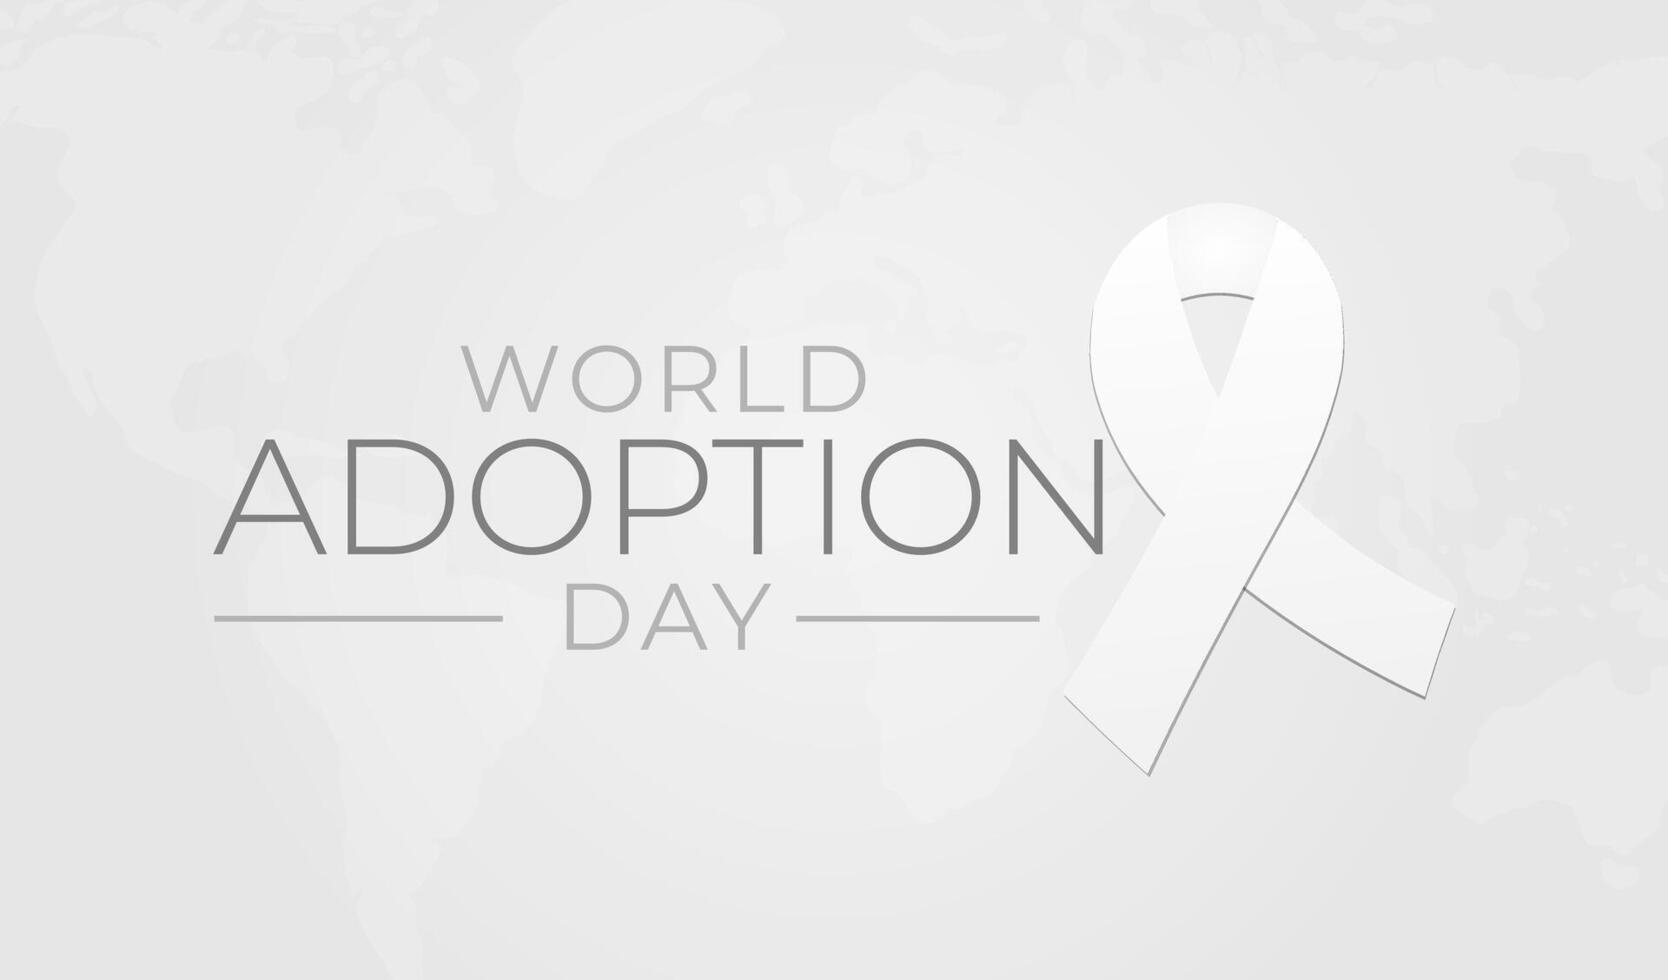 World Adoption Day Background Illustration vector